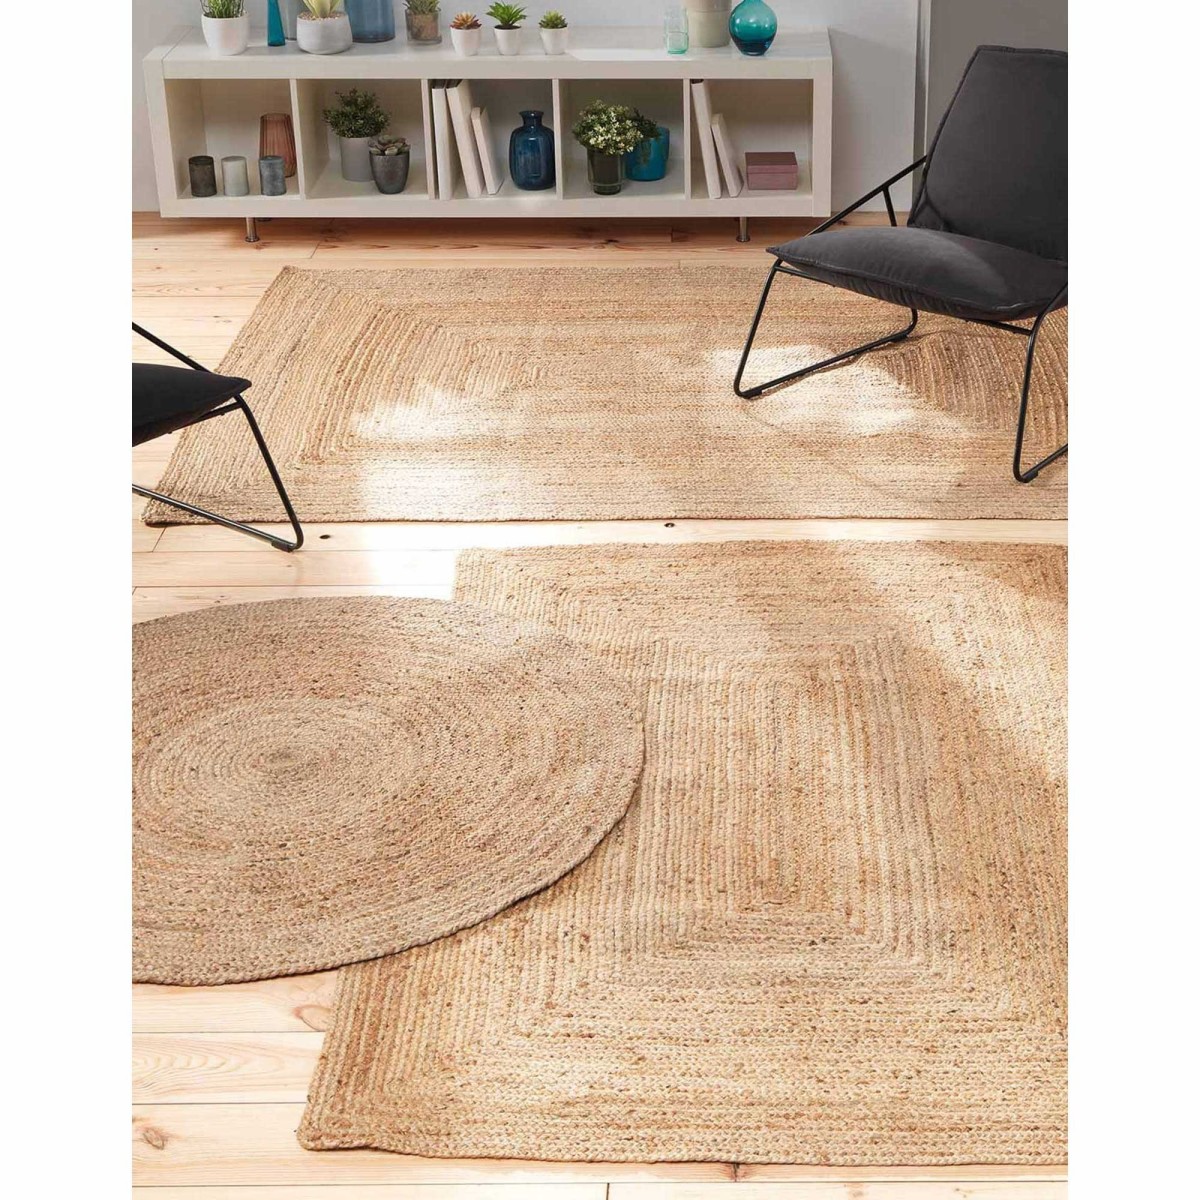 Blancheporte Obdĺžnikový jutový koberec béžová 120x180cm